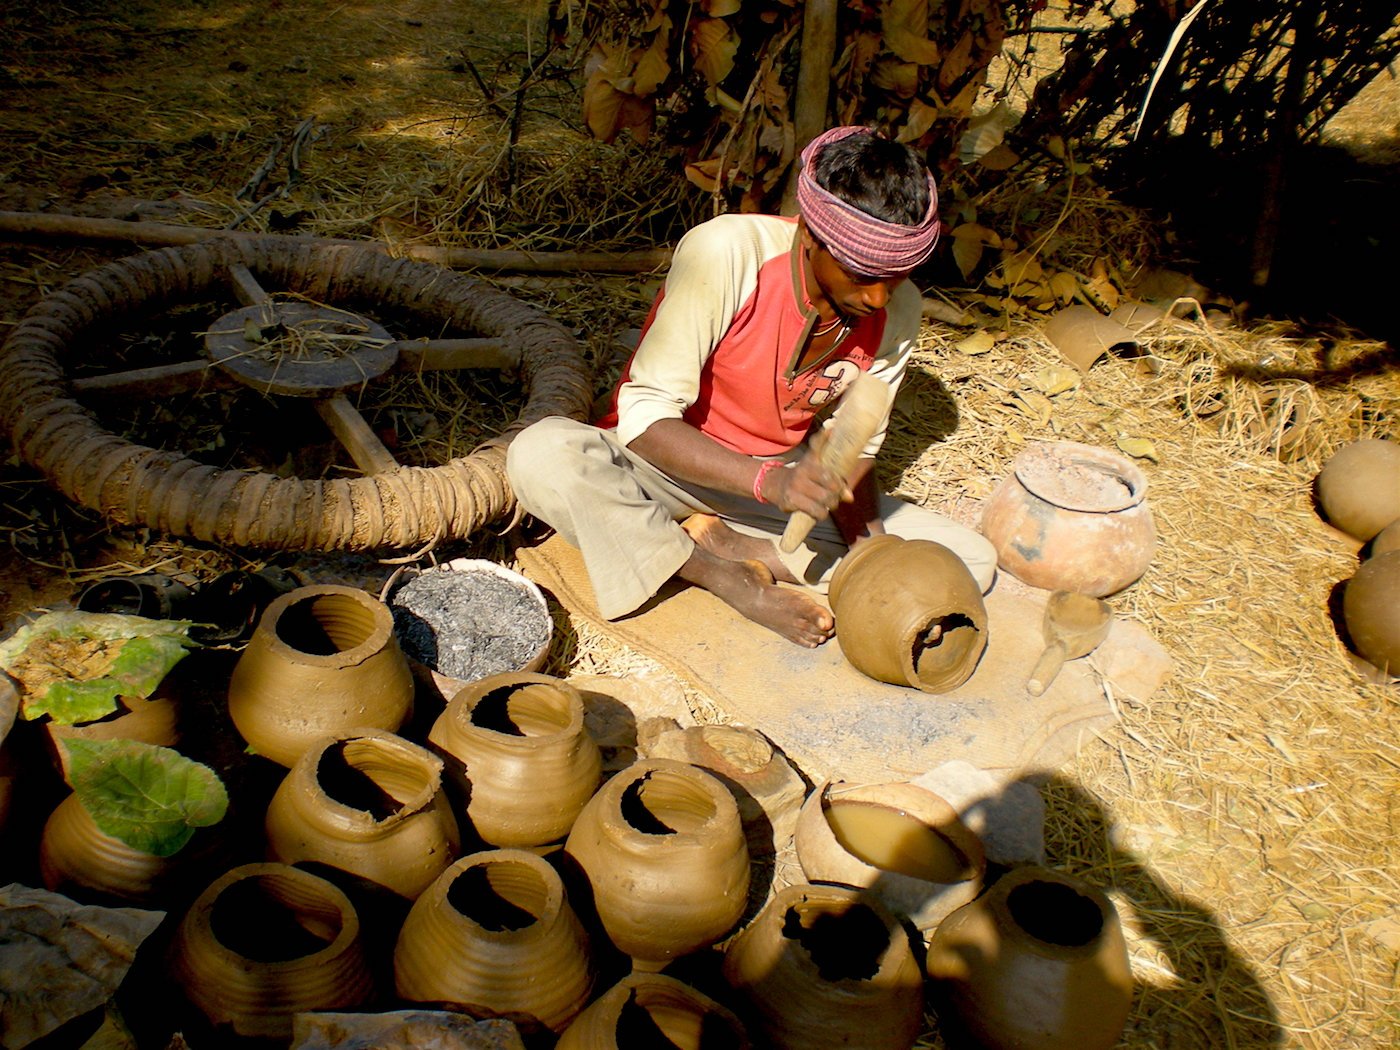 Hari Dhangdamajhi sculpting pots